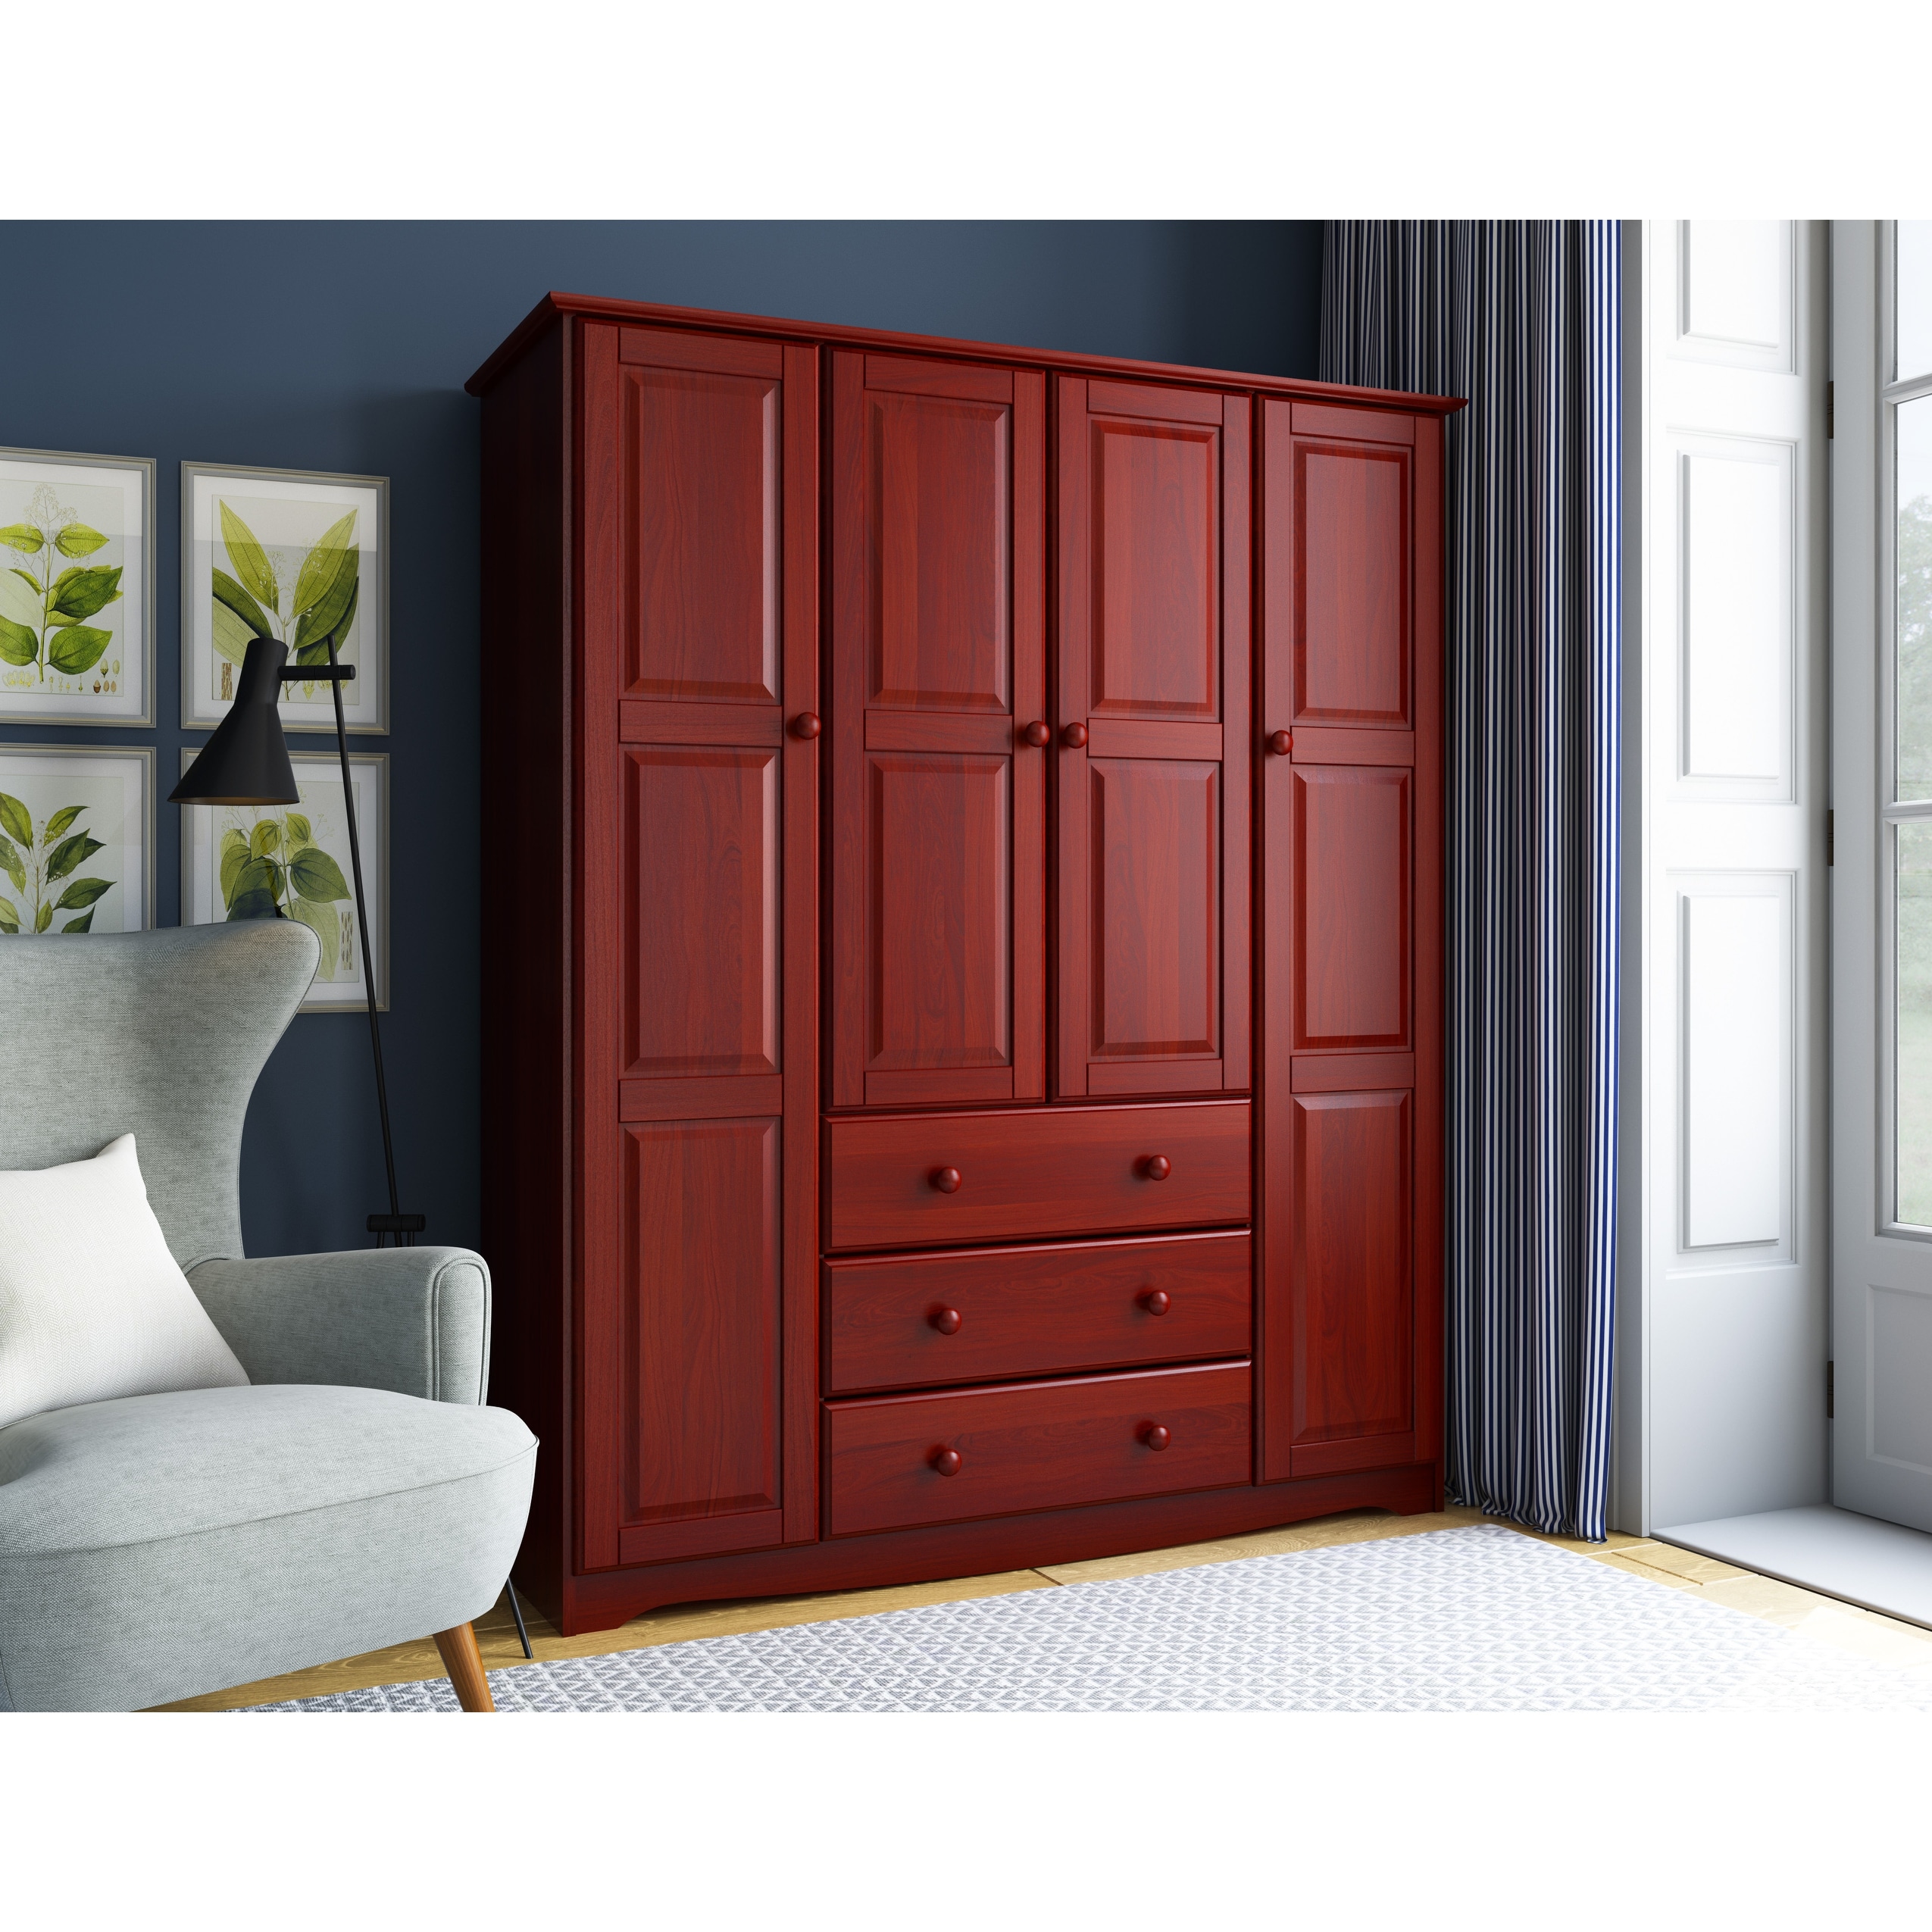 Storage Wardrobe Cabinet Armoire Bedroom Organizer Shelves Drawer Furniture Wood 